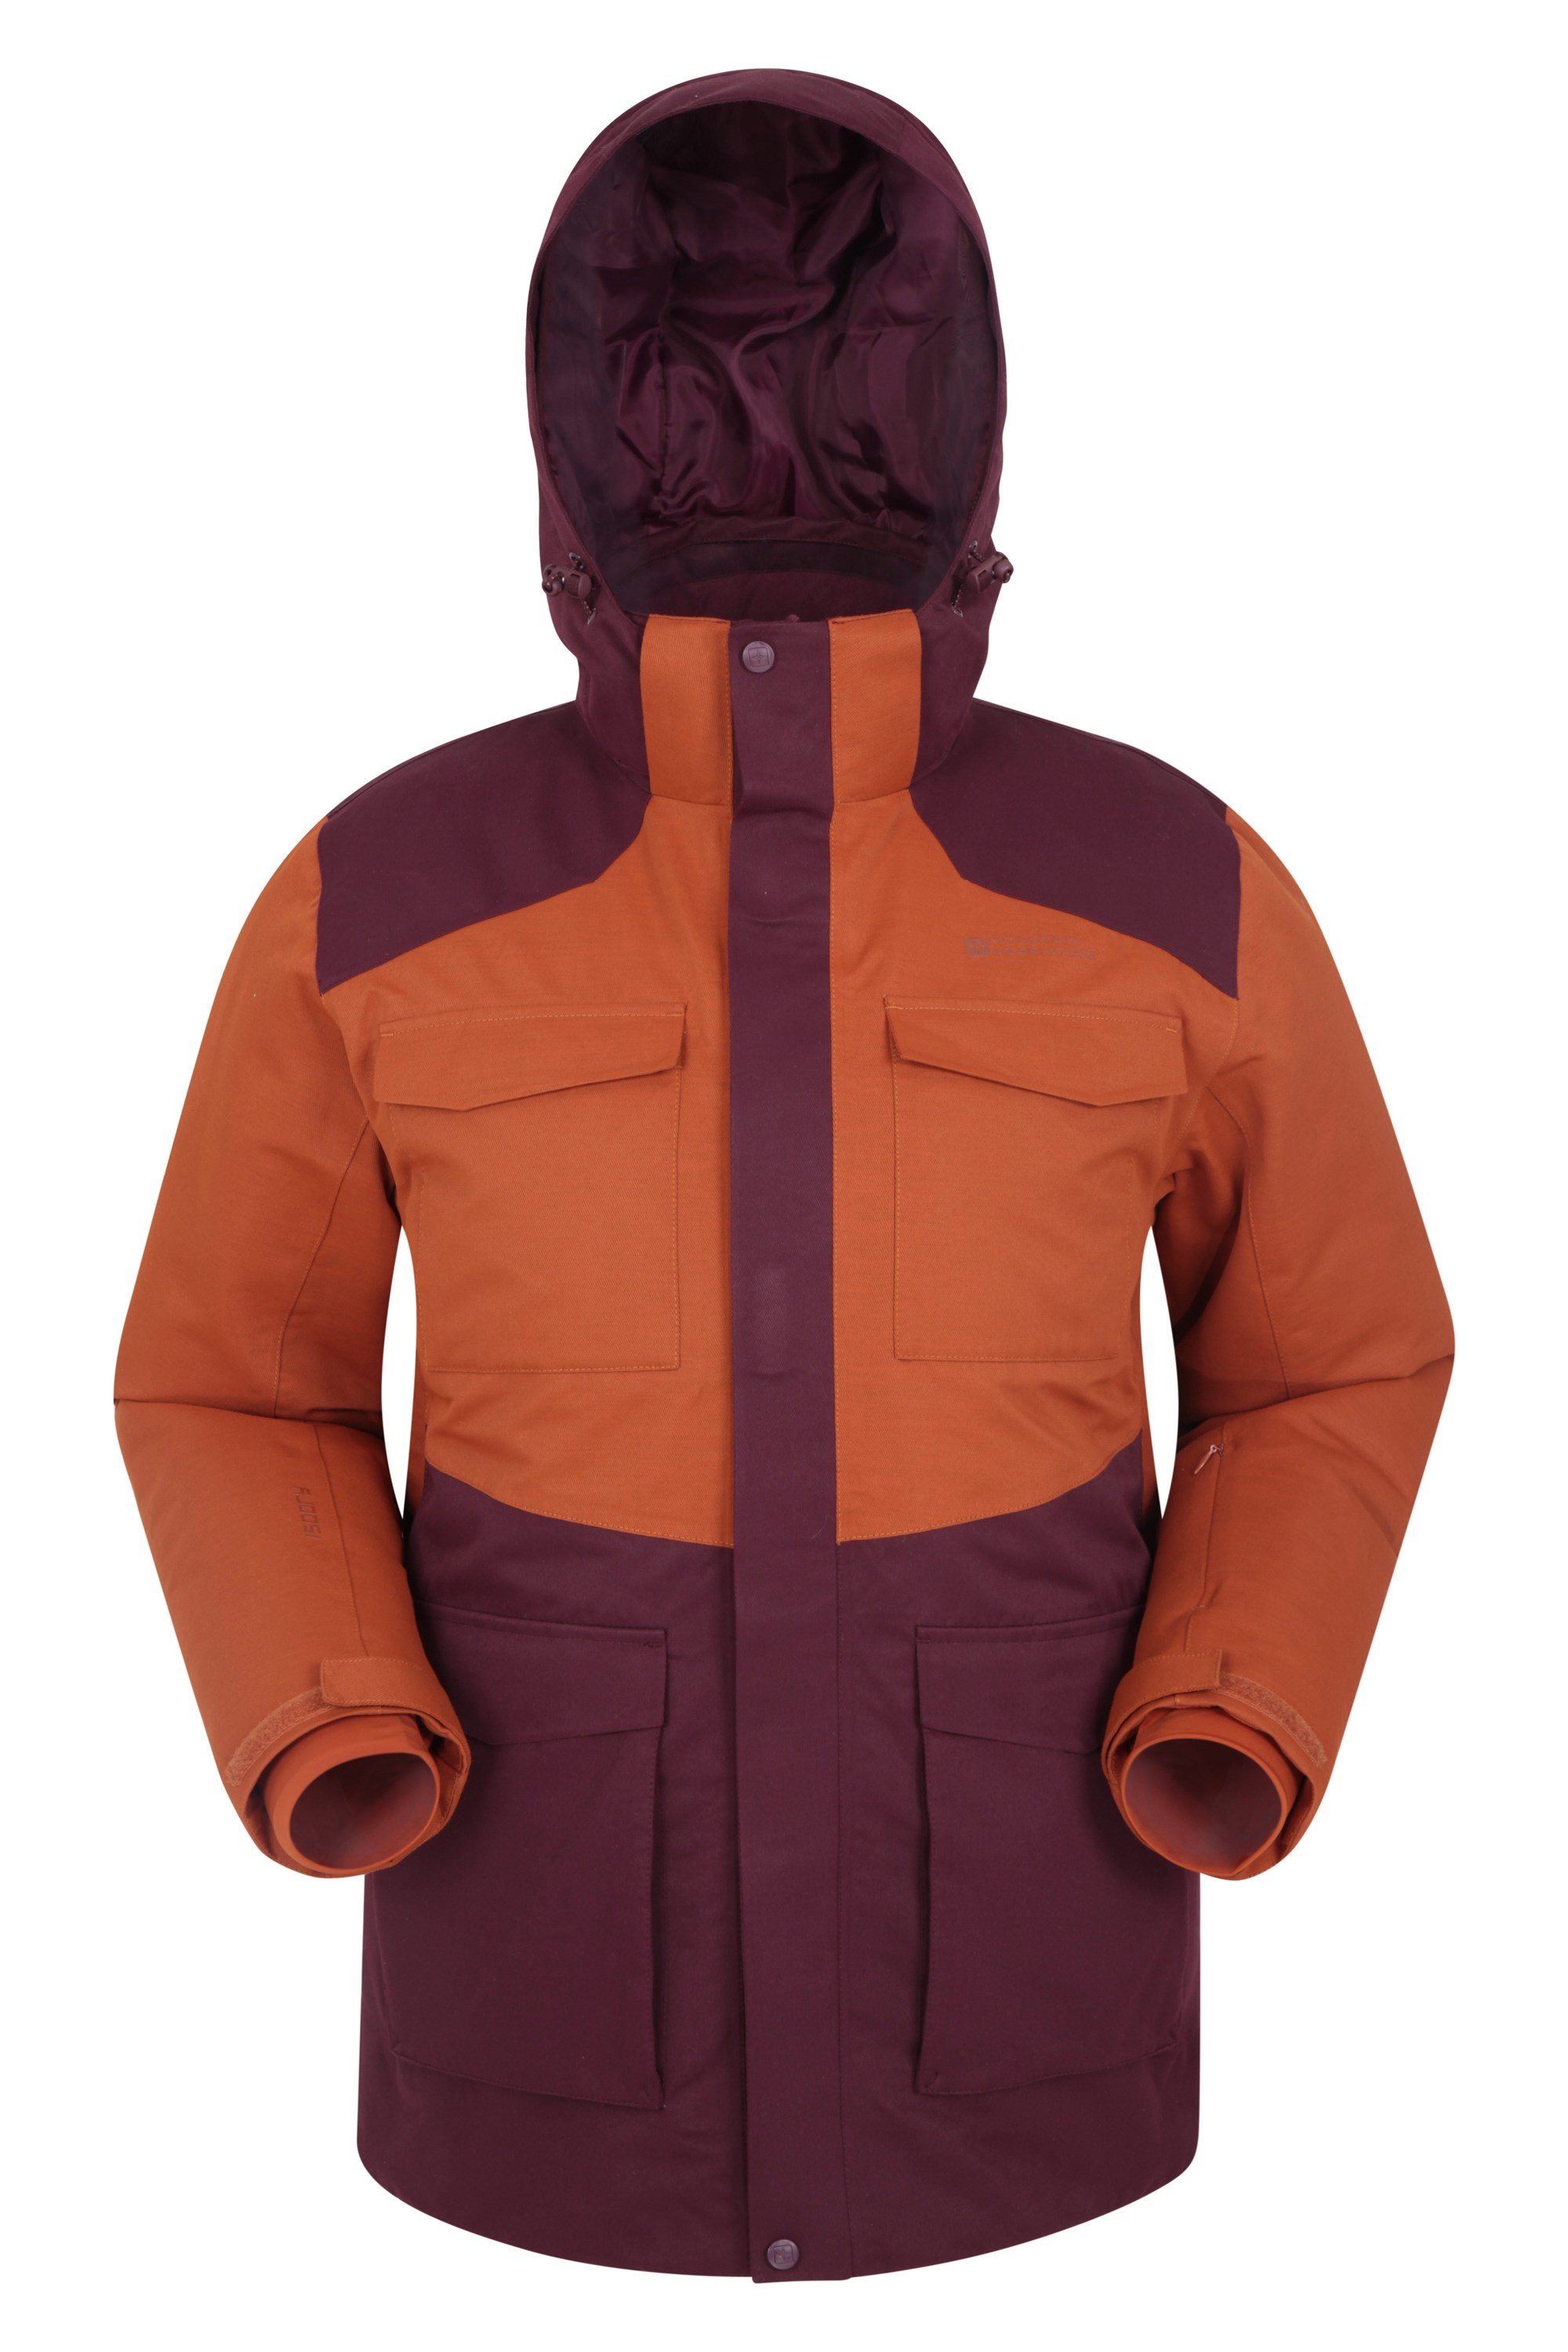 Mountain Warehouse Mens Waterproof Ski Jacket Breathable Winter Snow Coat 